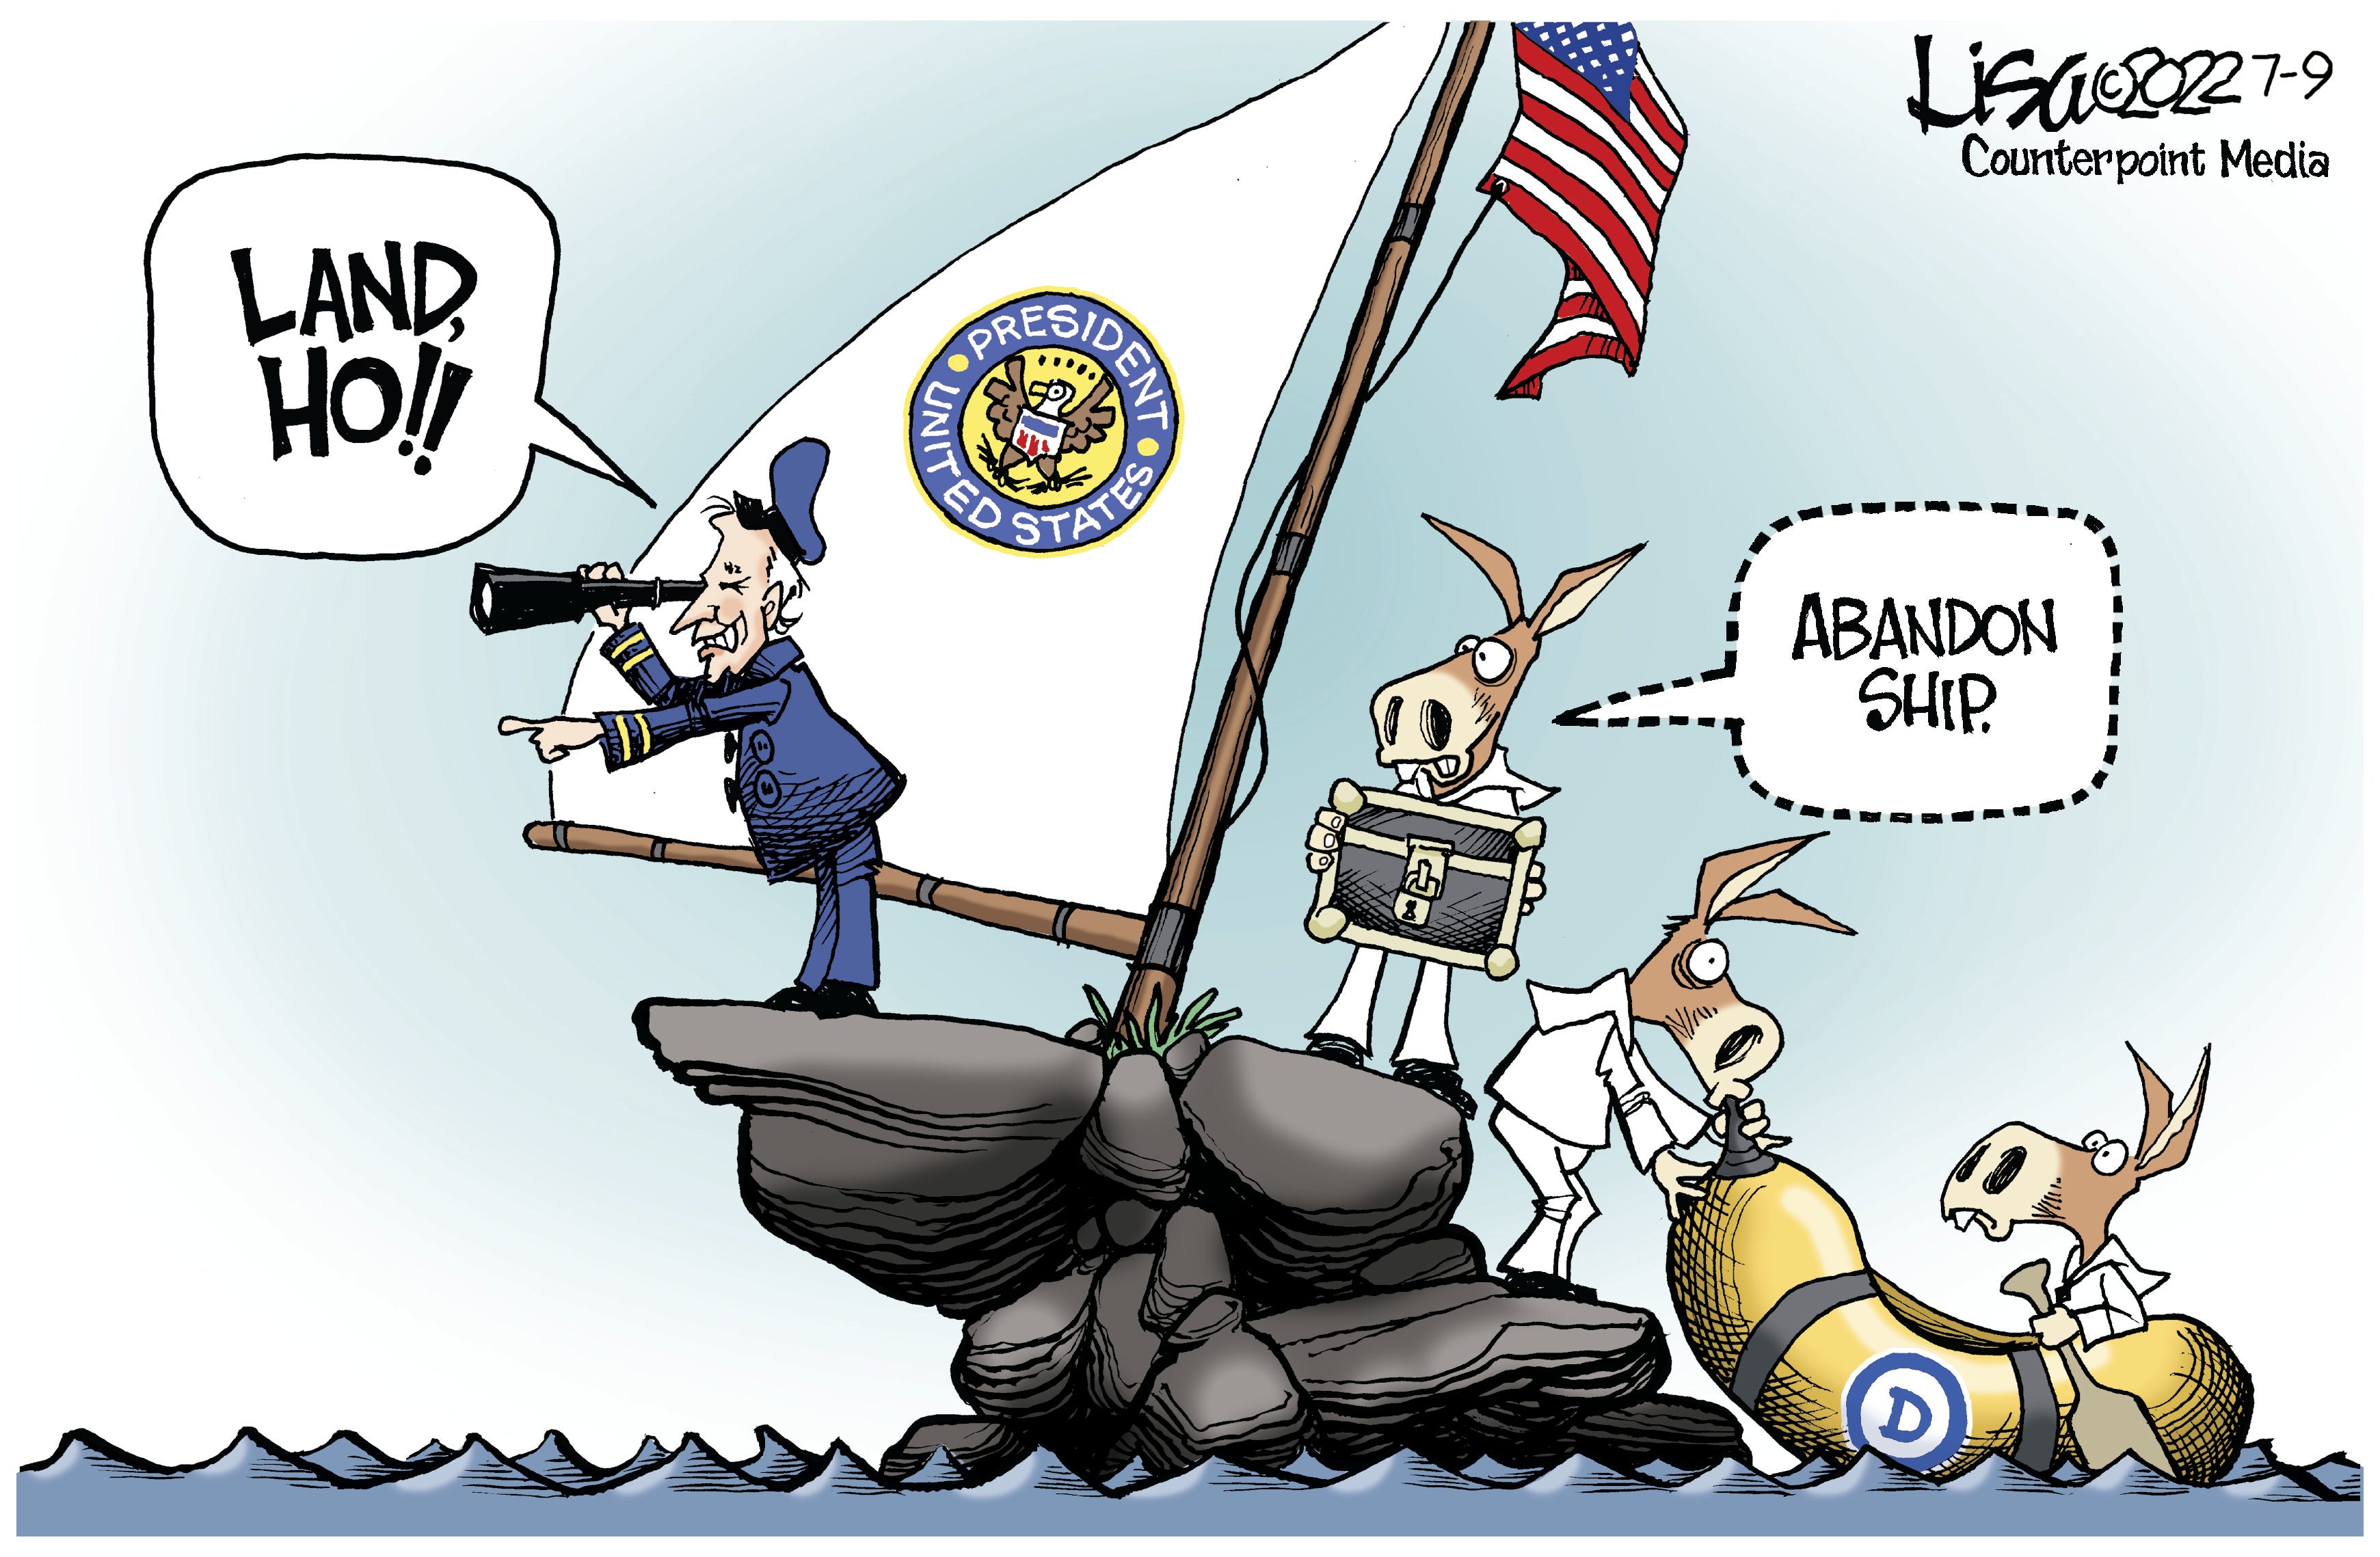 Editorial cartoon, July 13, 2022: Abandon ship